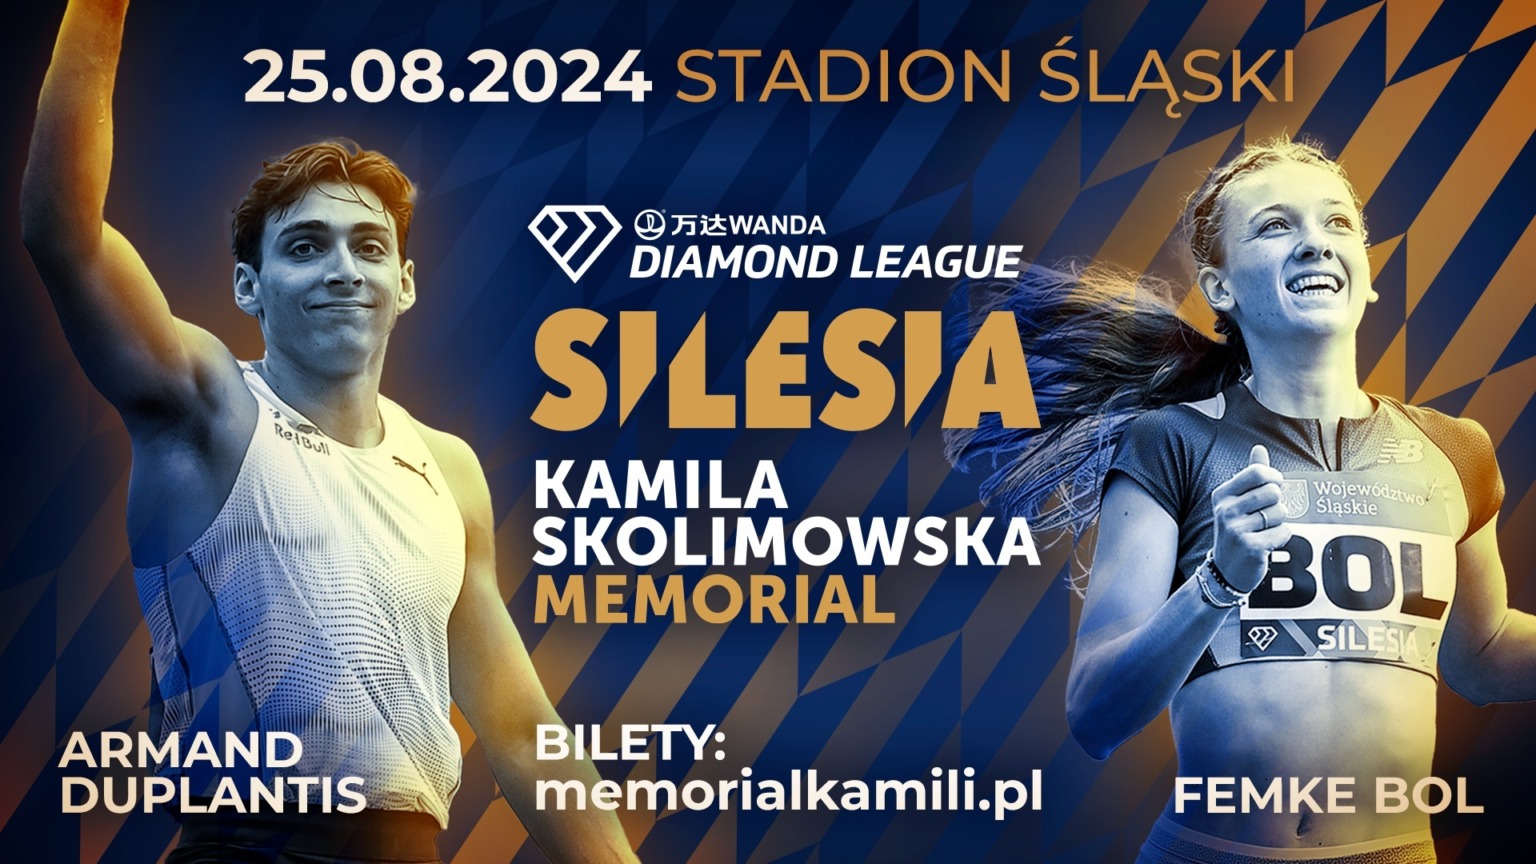 Duplantis and Bolt to headline 2024 Silesia Diamond League! Event list